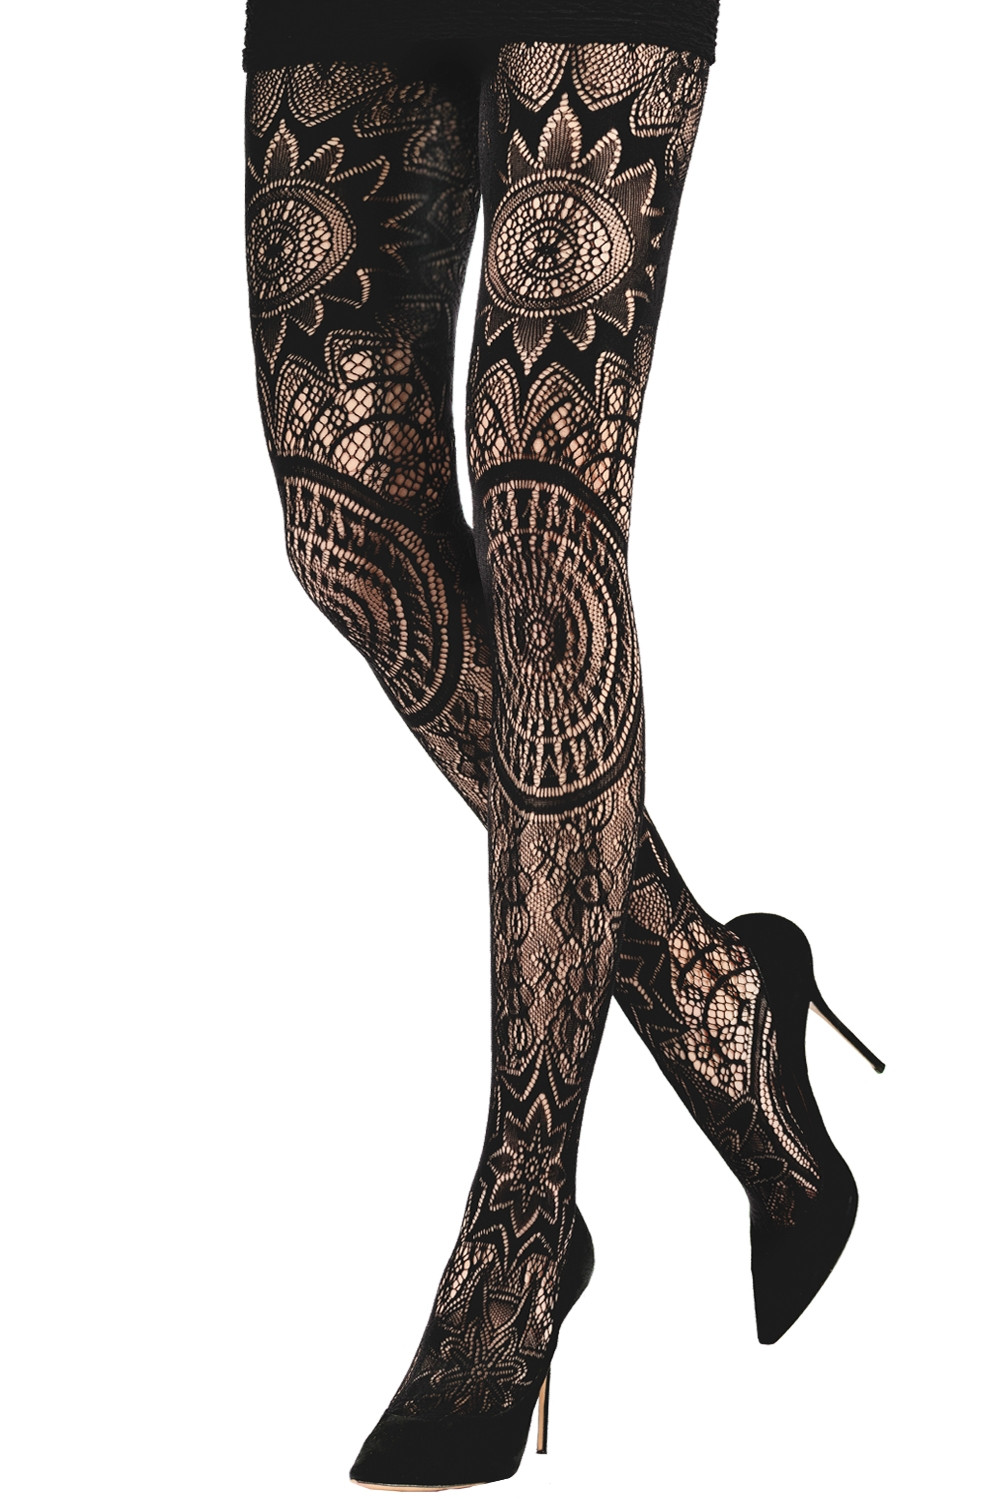 Generic Women Black Stockings New Designer Tights Style 2 Black